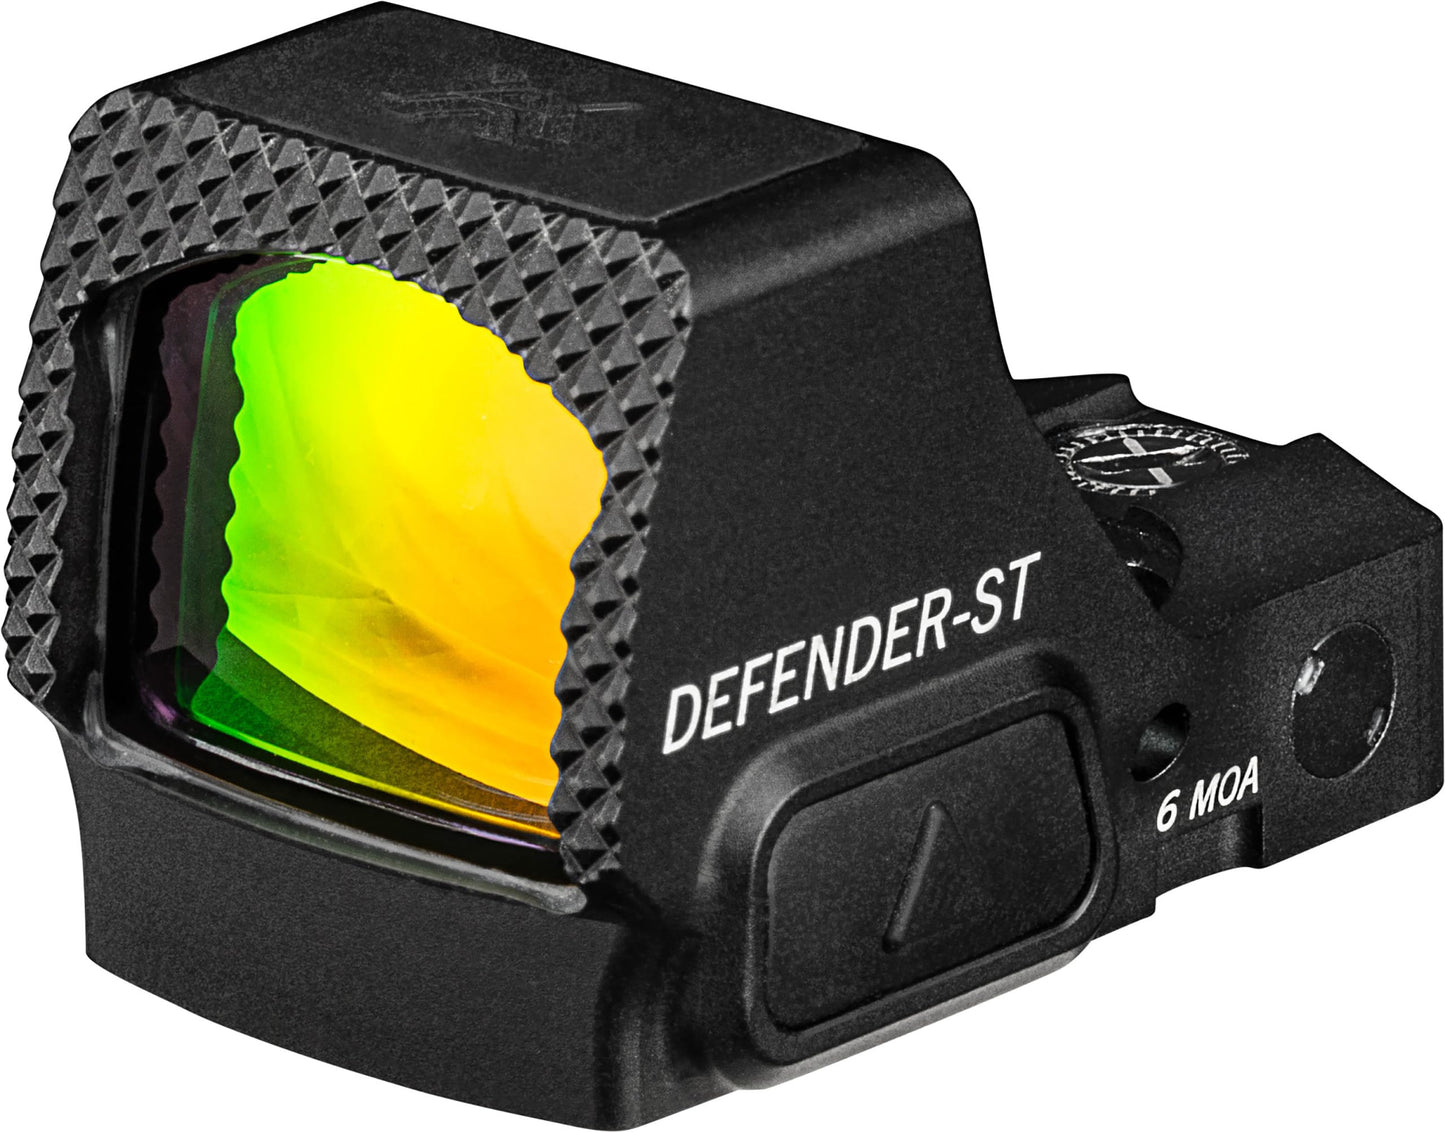 Vortex Optics Defender-ST Micro Red Dot Sights - DFST-MRD6